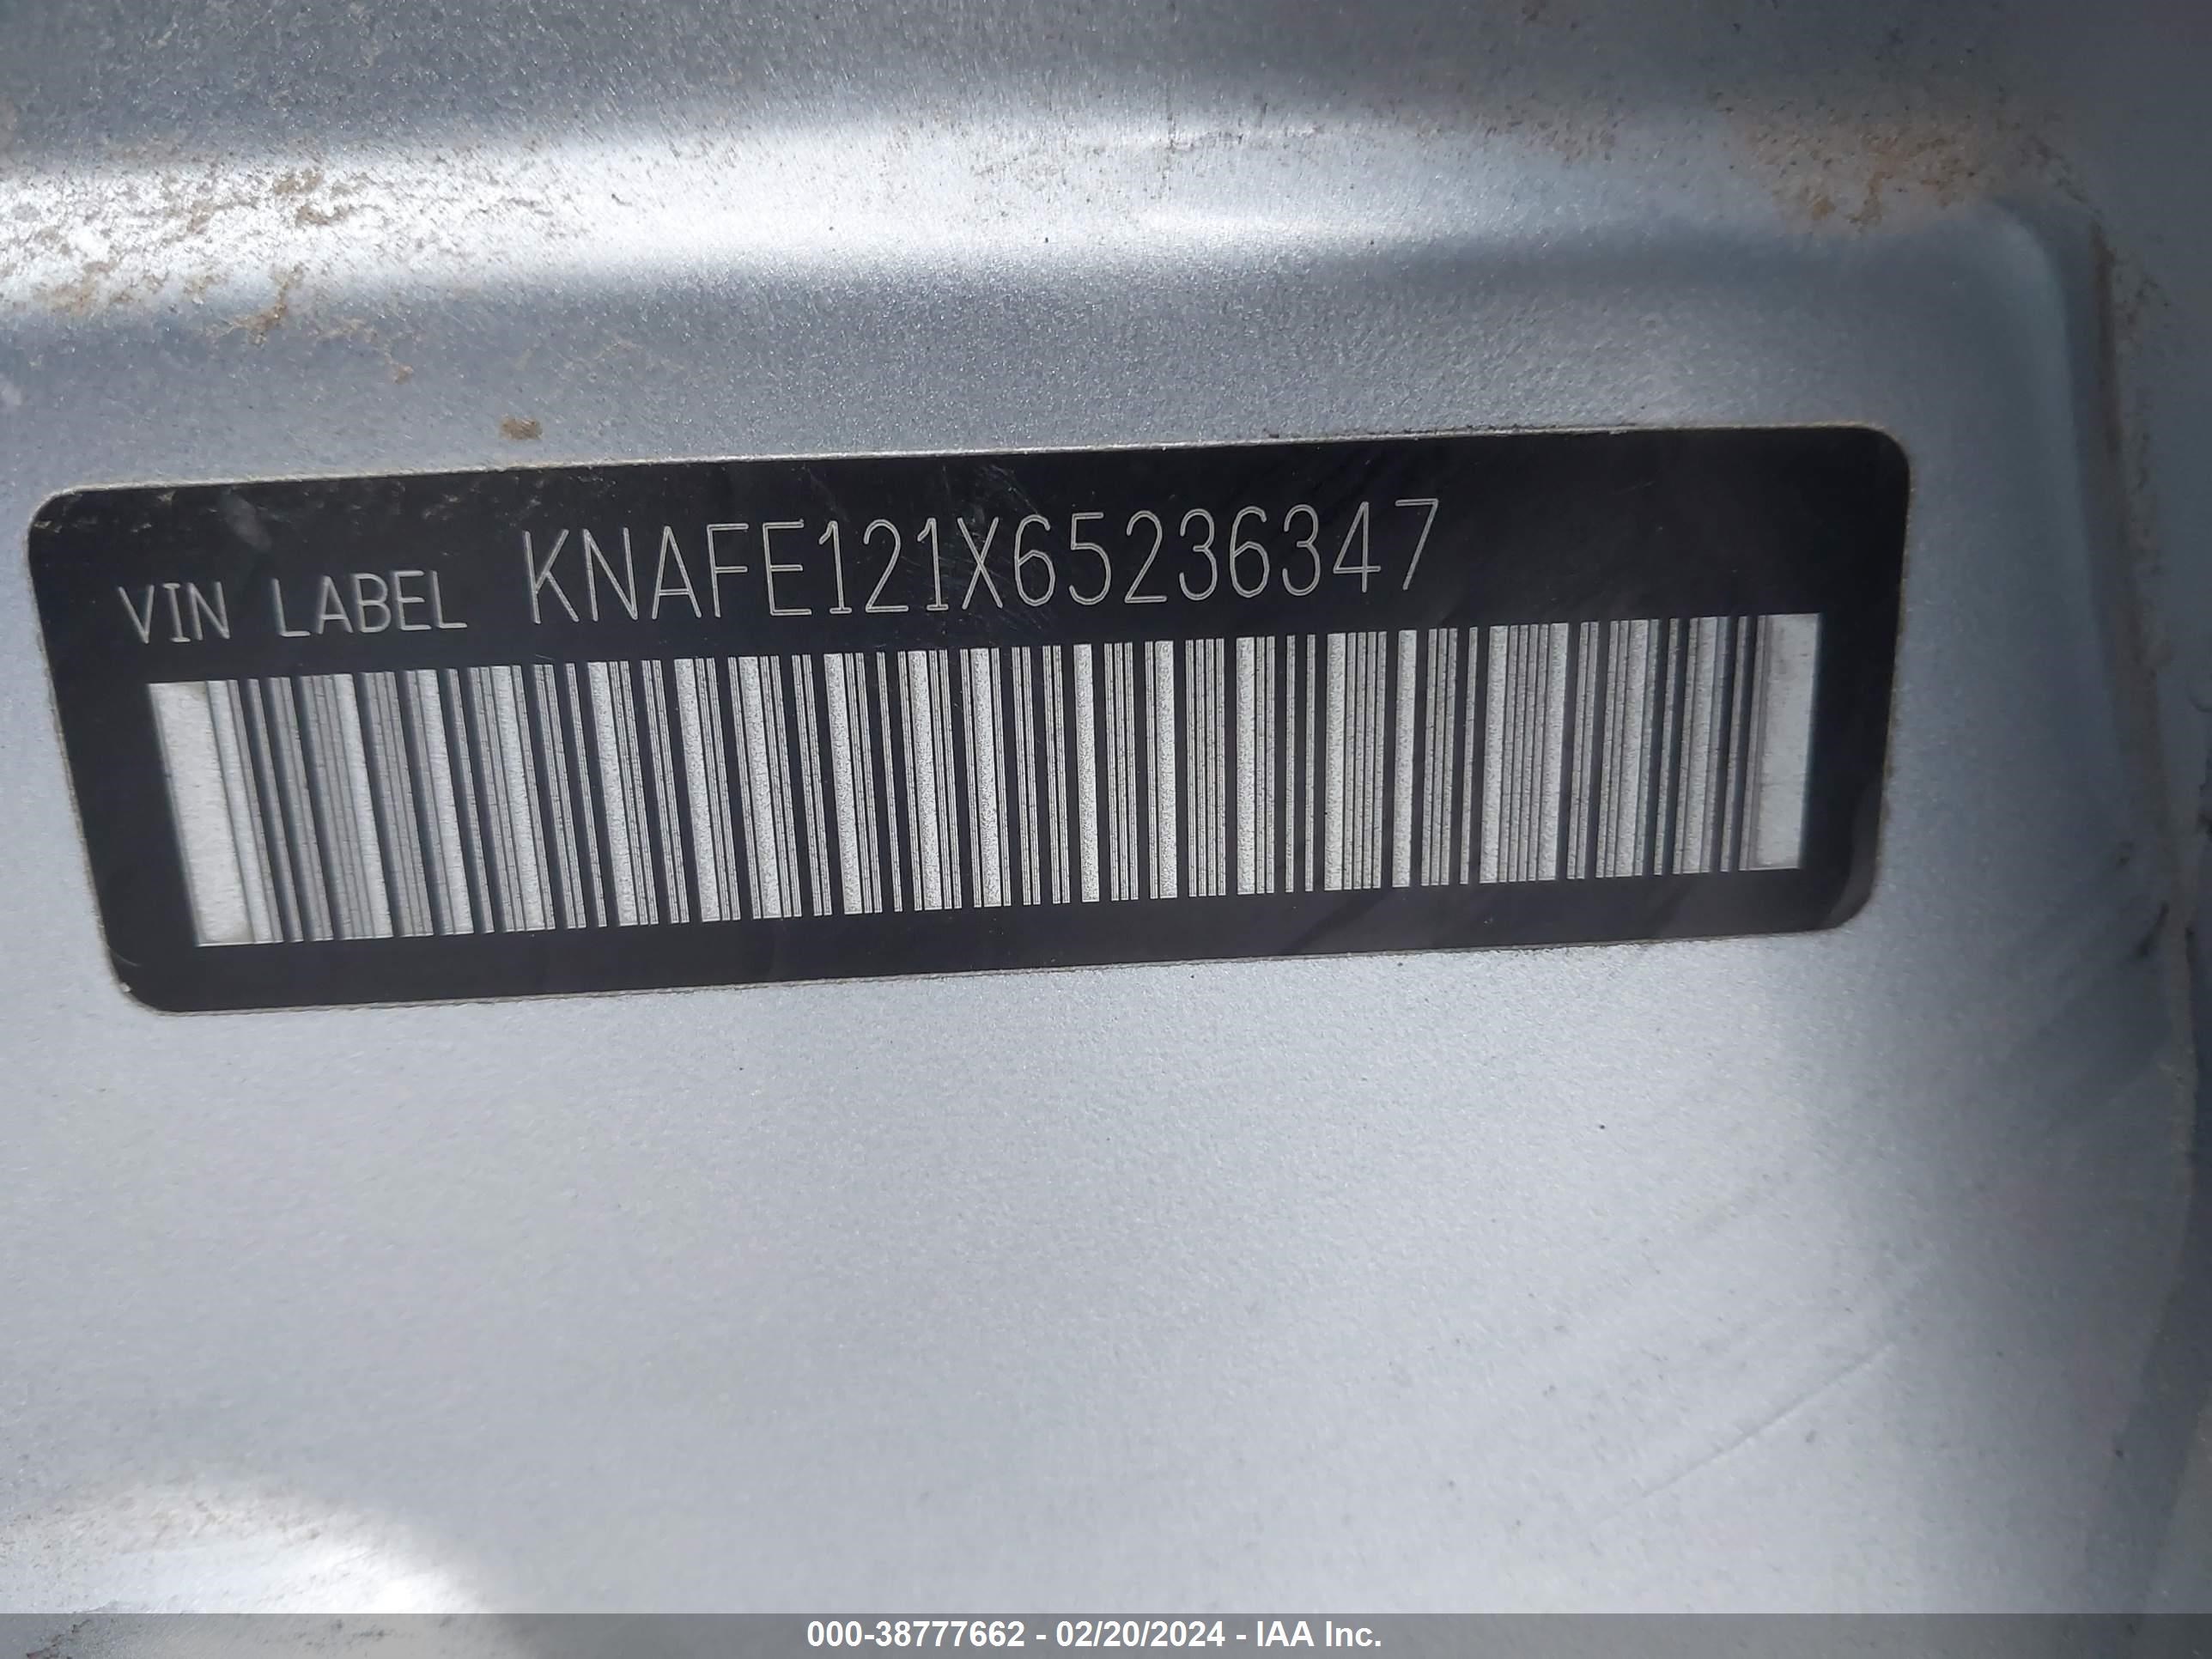 KNAFE121X65236347  - KIA SPECTRA  2006 IMG - 8